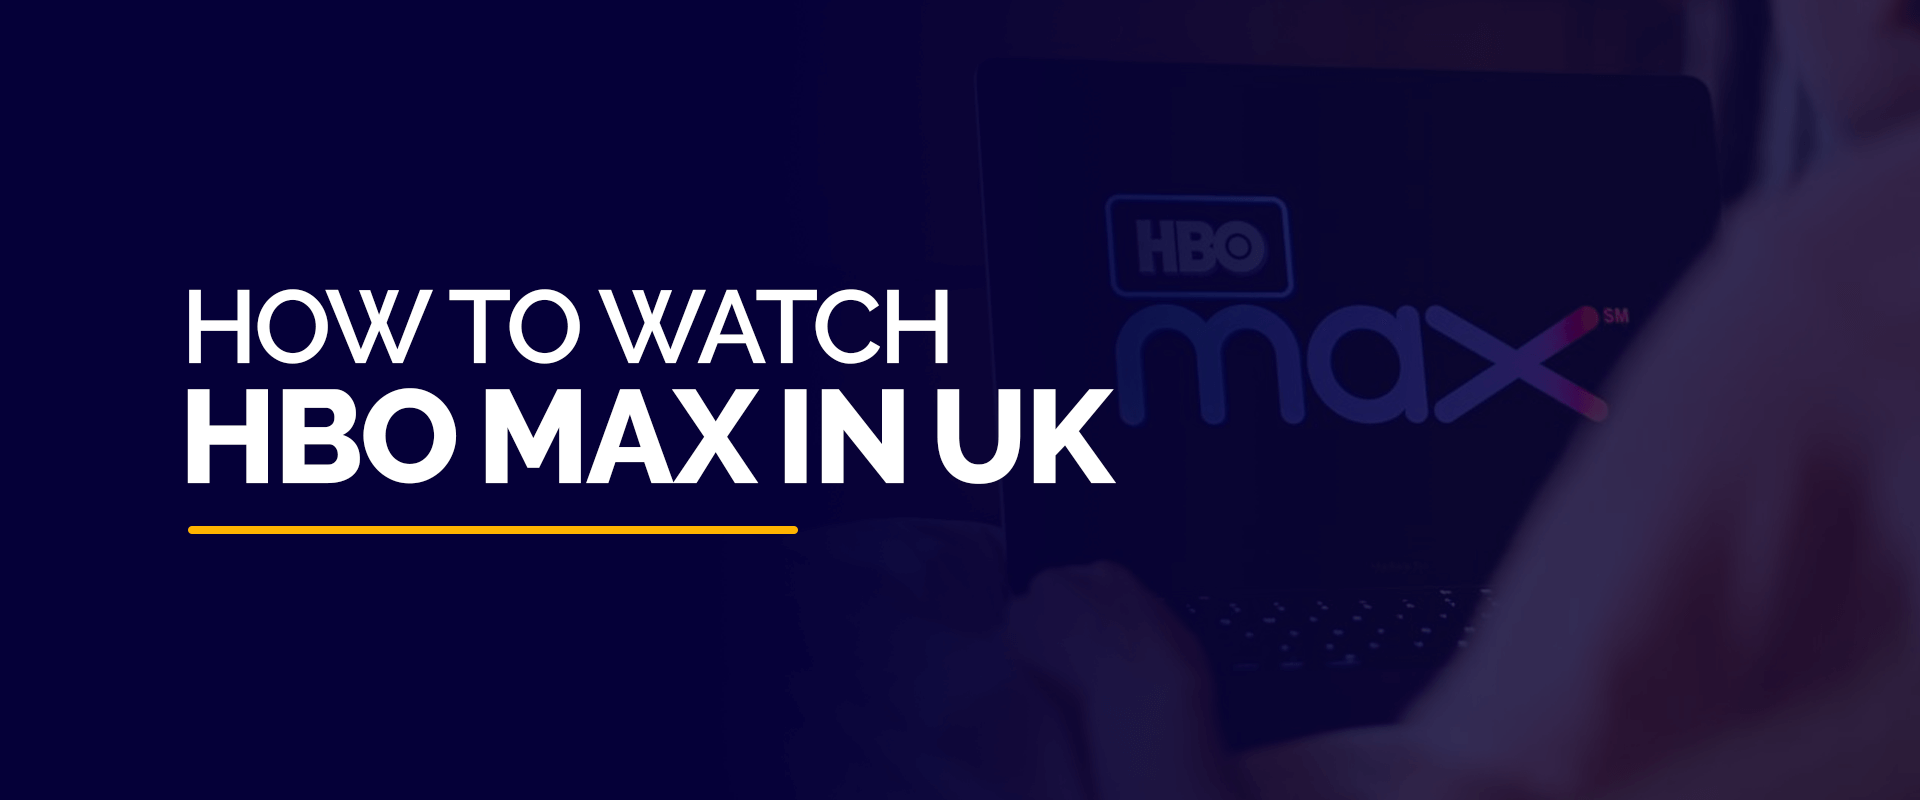 Bølle hjemmehørende værdi Jak oglądać HBO Max w Wielkiej Brytanii